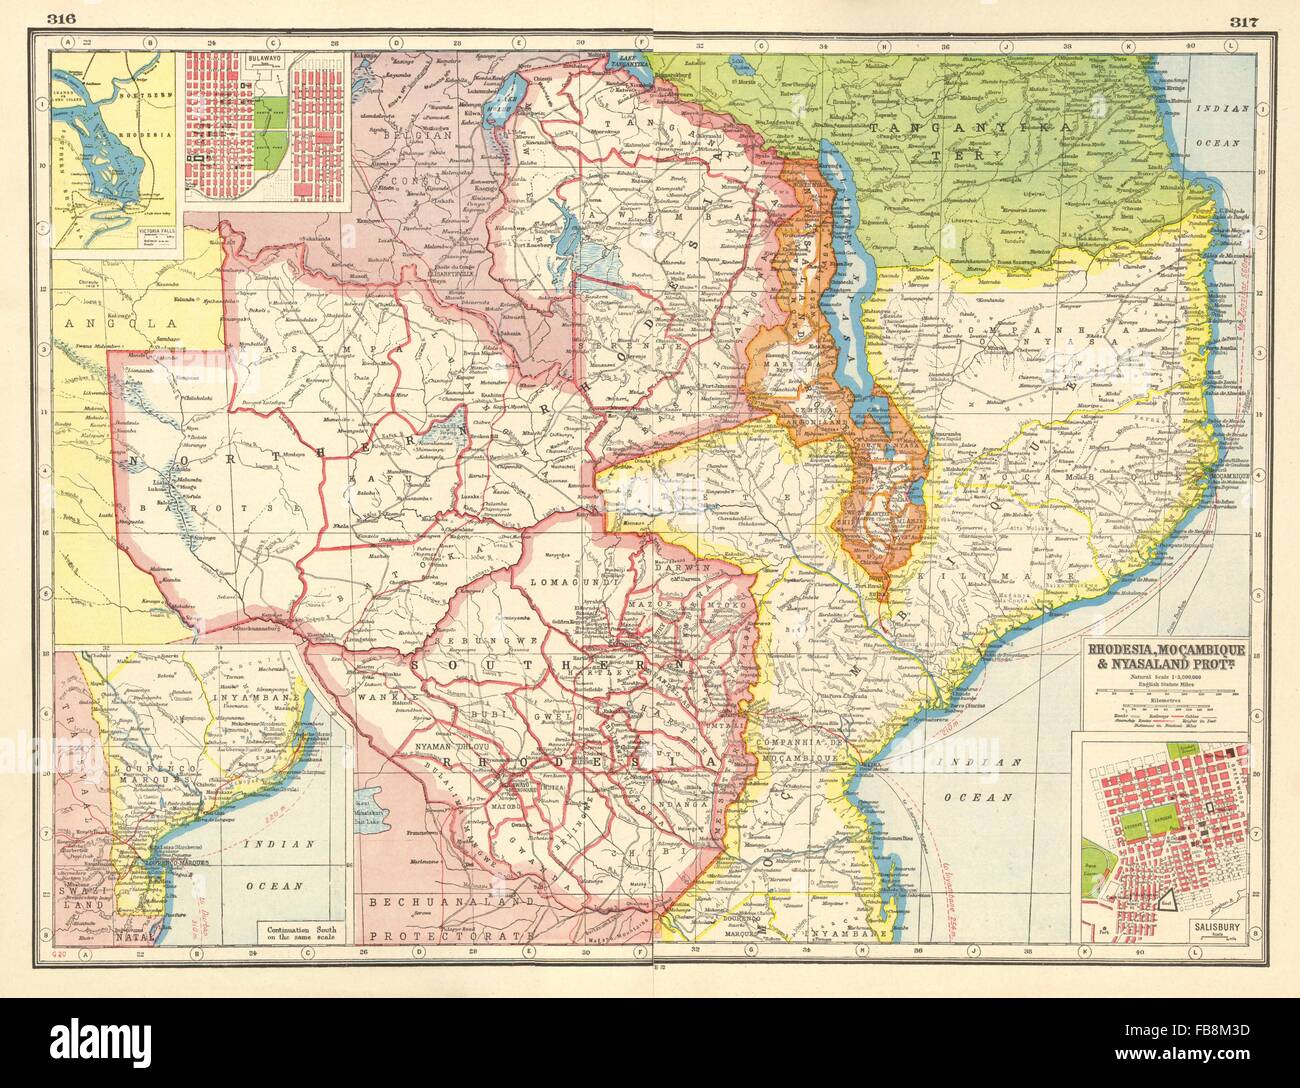 EAST AFRICA: Rhodesia Mozambique Nyasaland. Bulawayo Salisbury/Harare, 1920 map Stock Photo